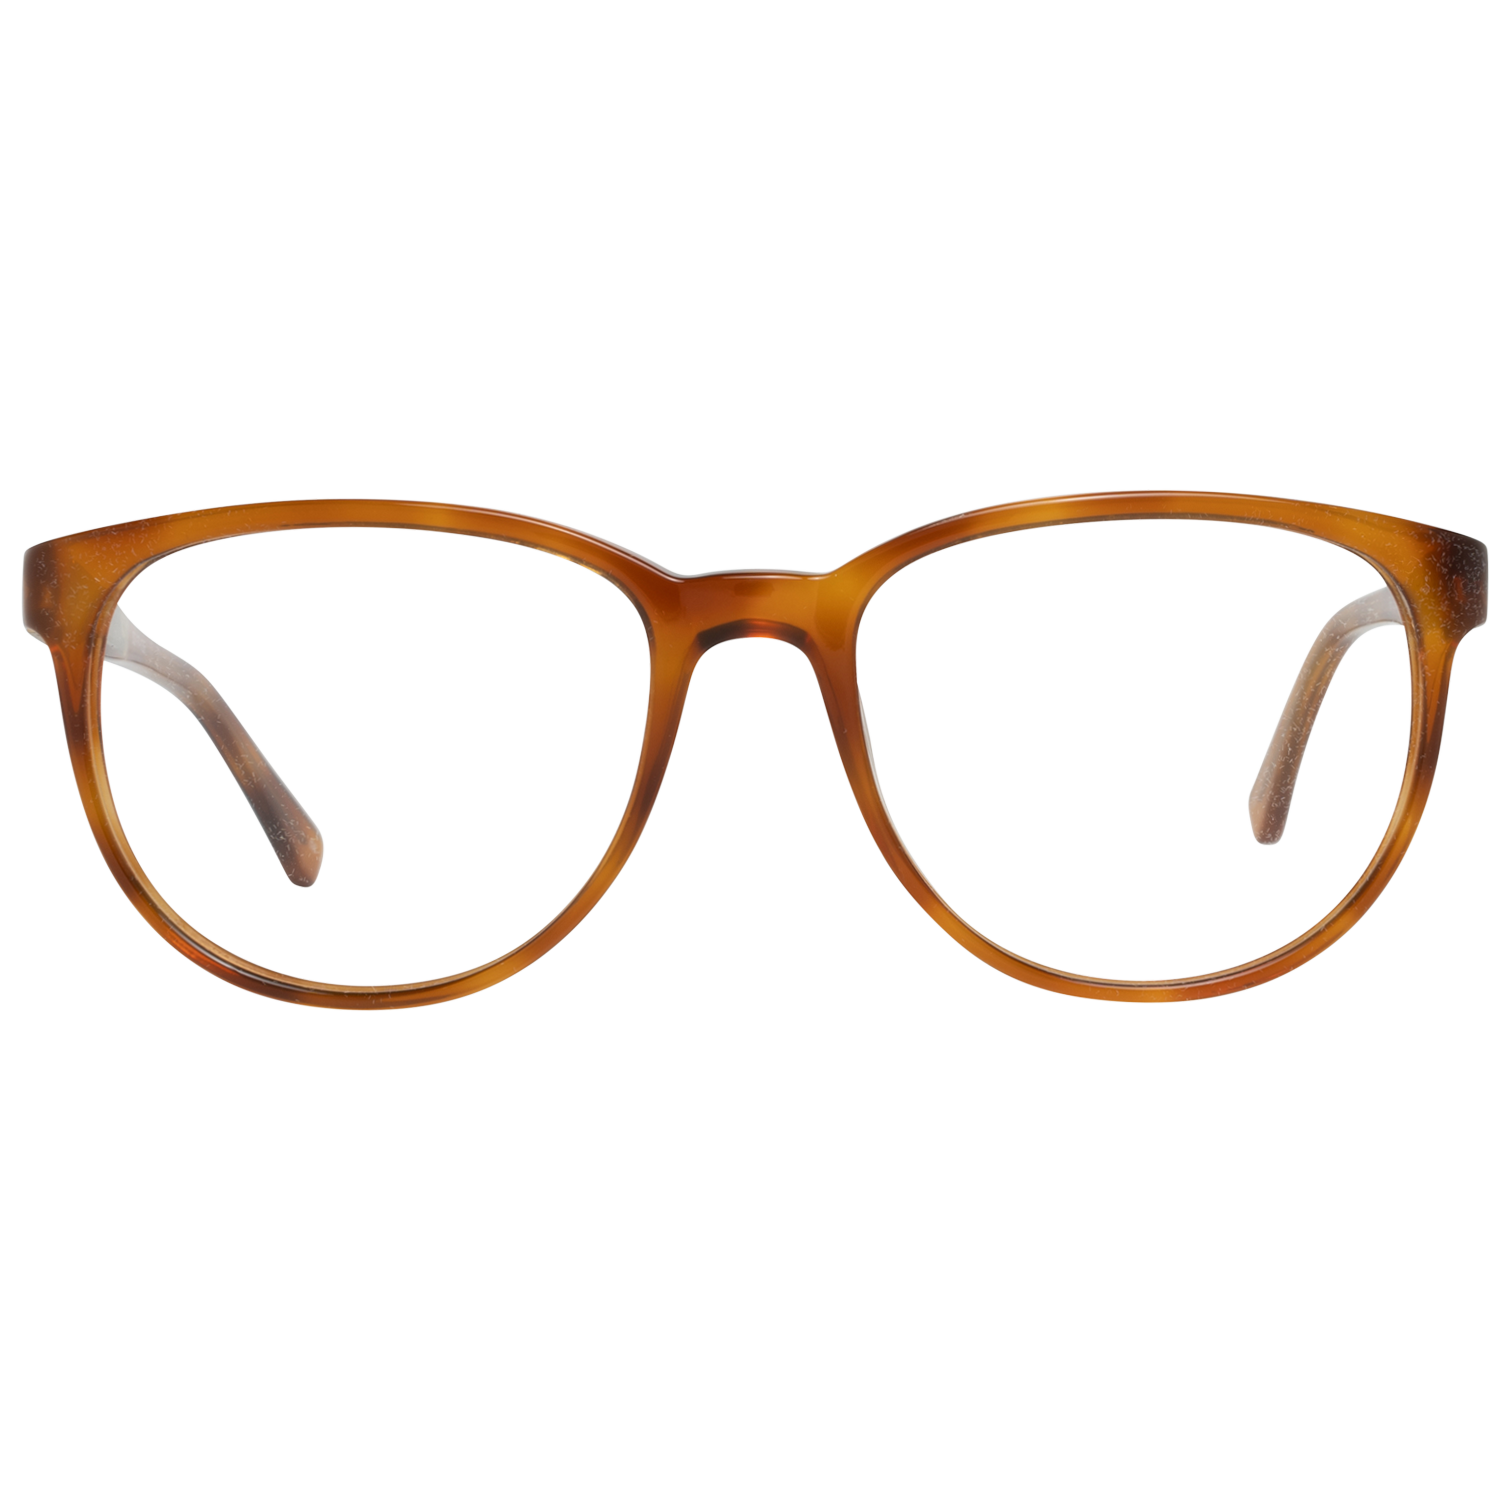 Roxy Frames Roxy Glasses Optical Frame ERJEG03031 ABRN 52 Eyeglasses Eyewear UK USA Australia 